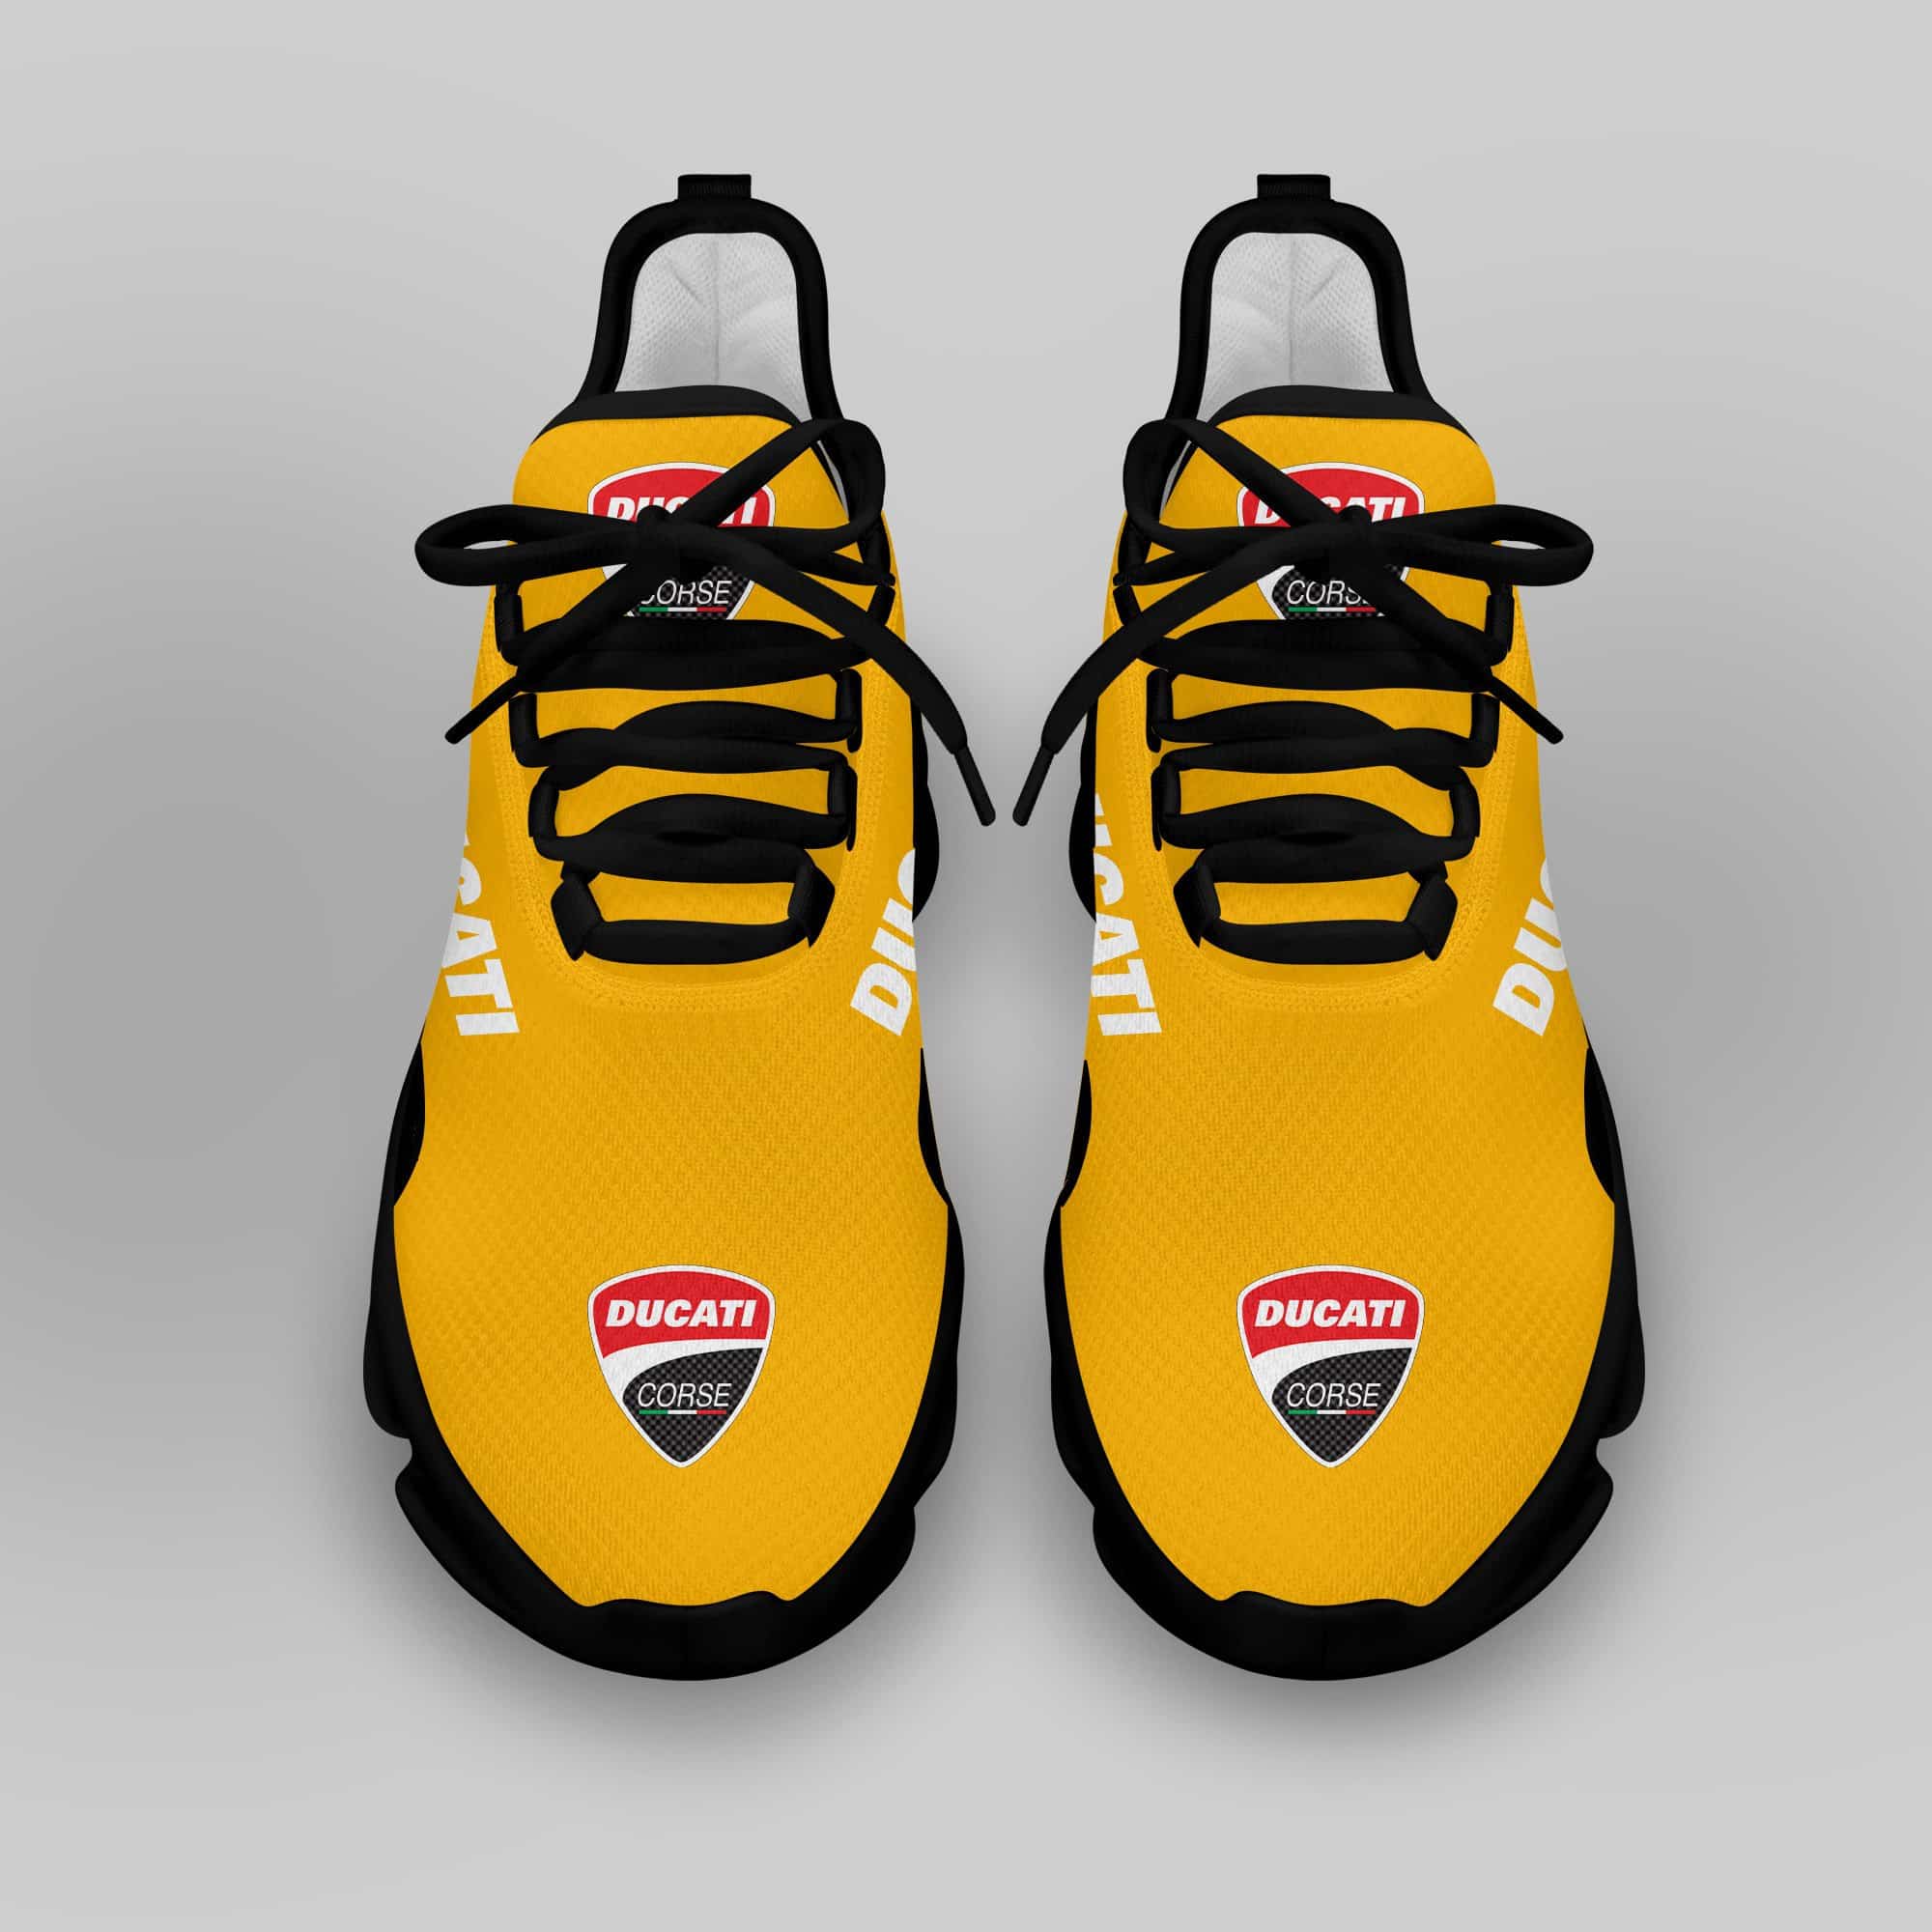 Ducati Racing Running Shoes Max Soul Shoes Sneakers Ver 66 4